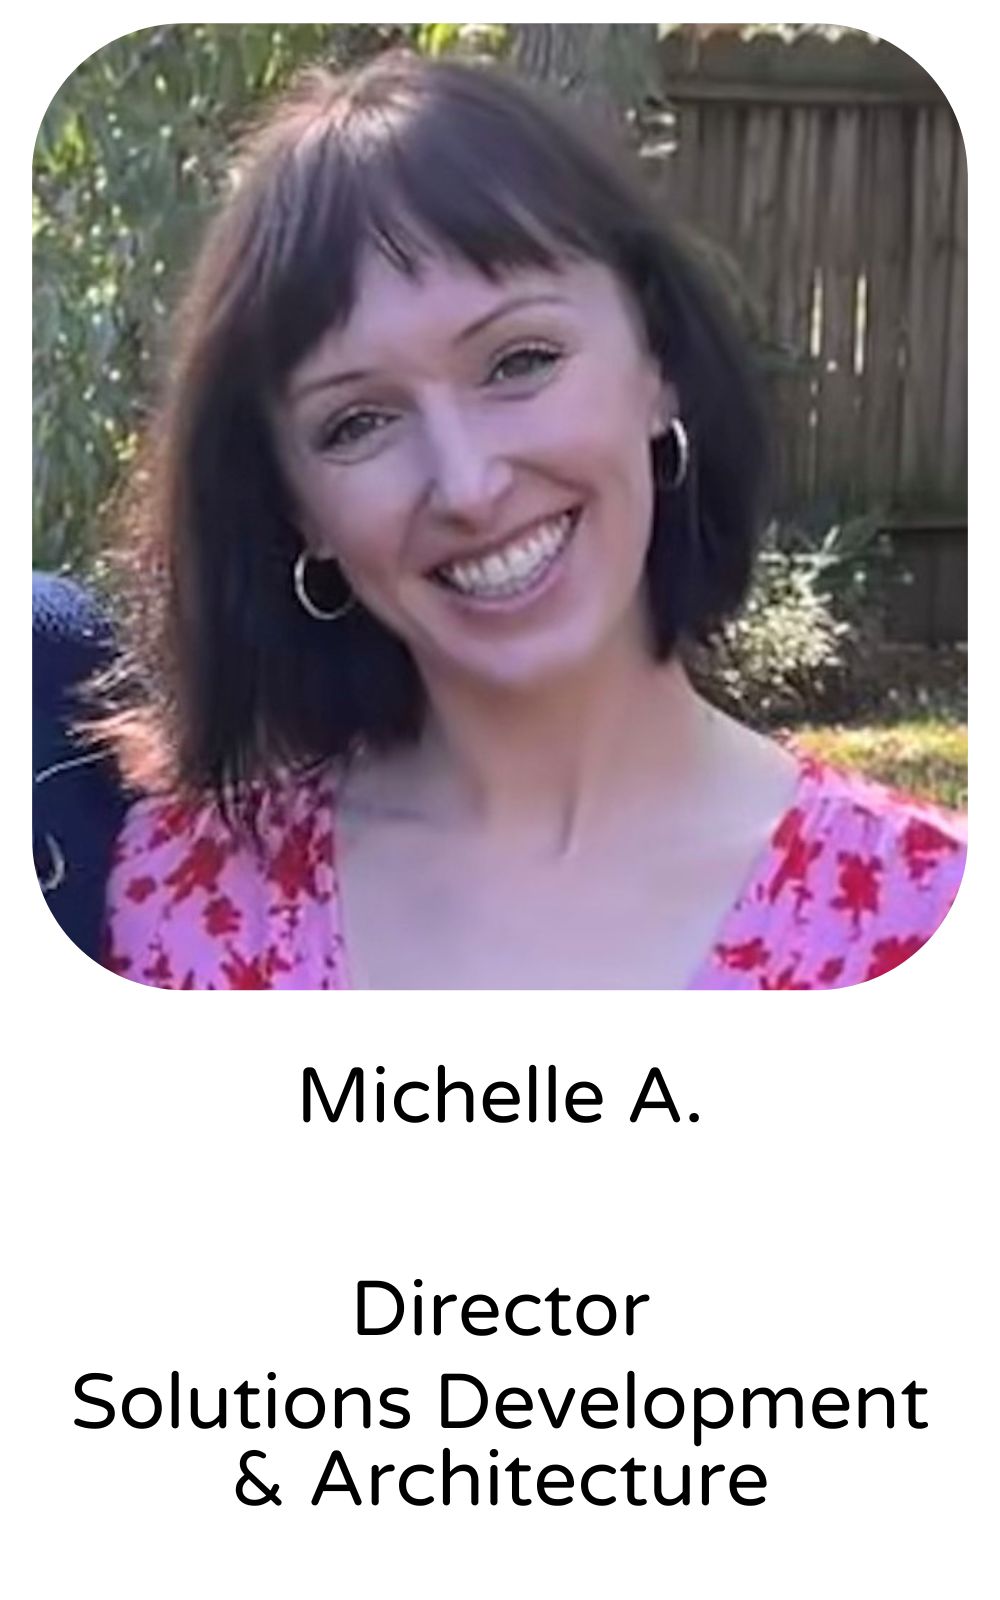 Michelle A, Director, Solutions Development & Architecture